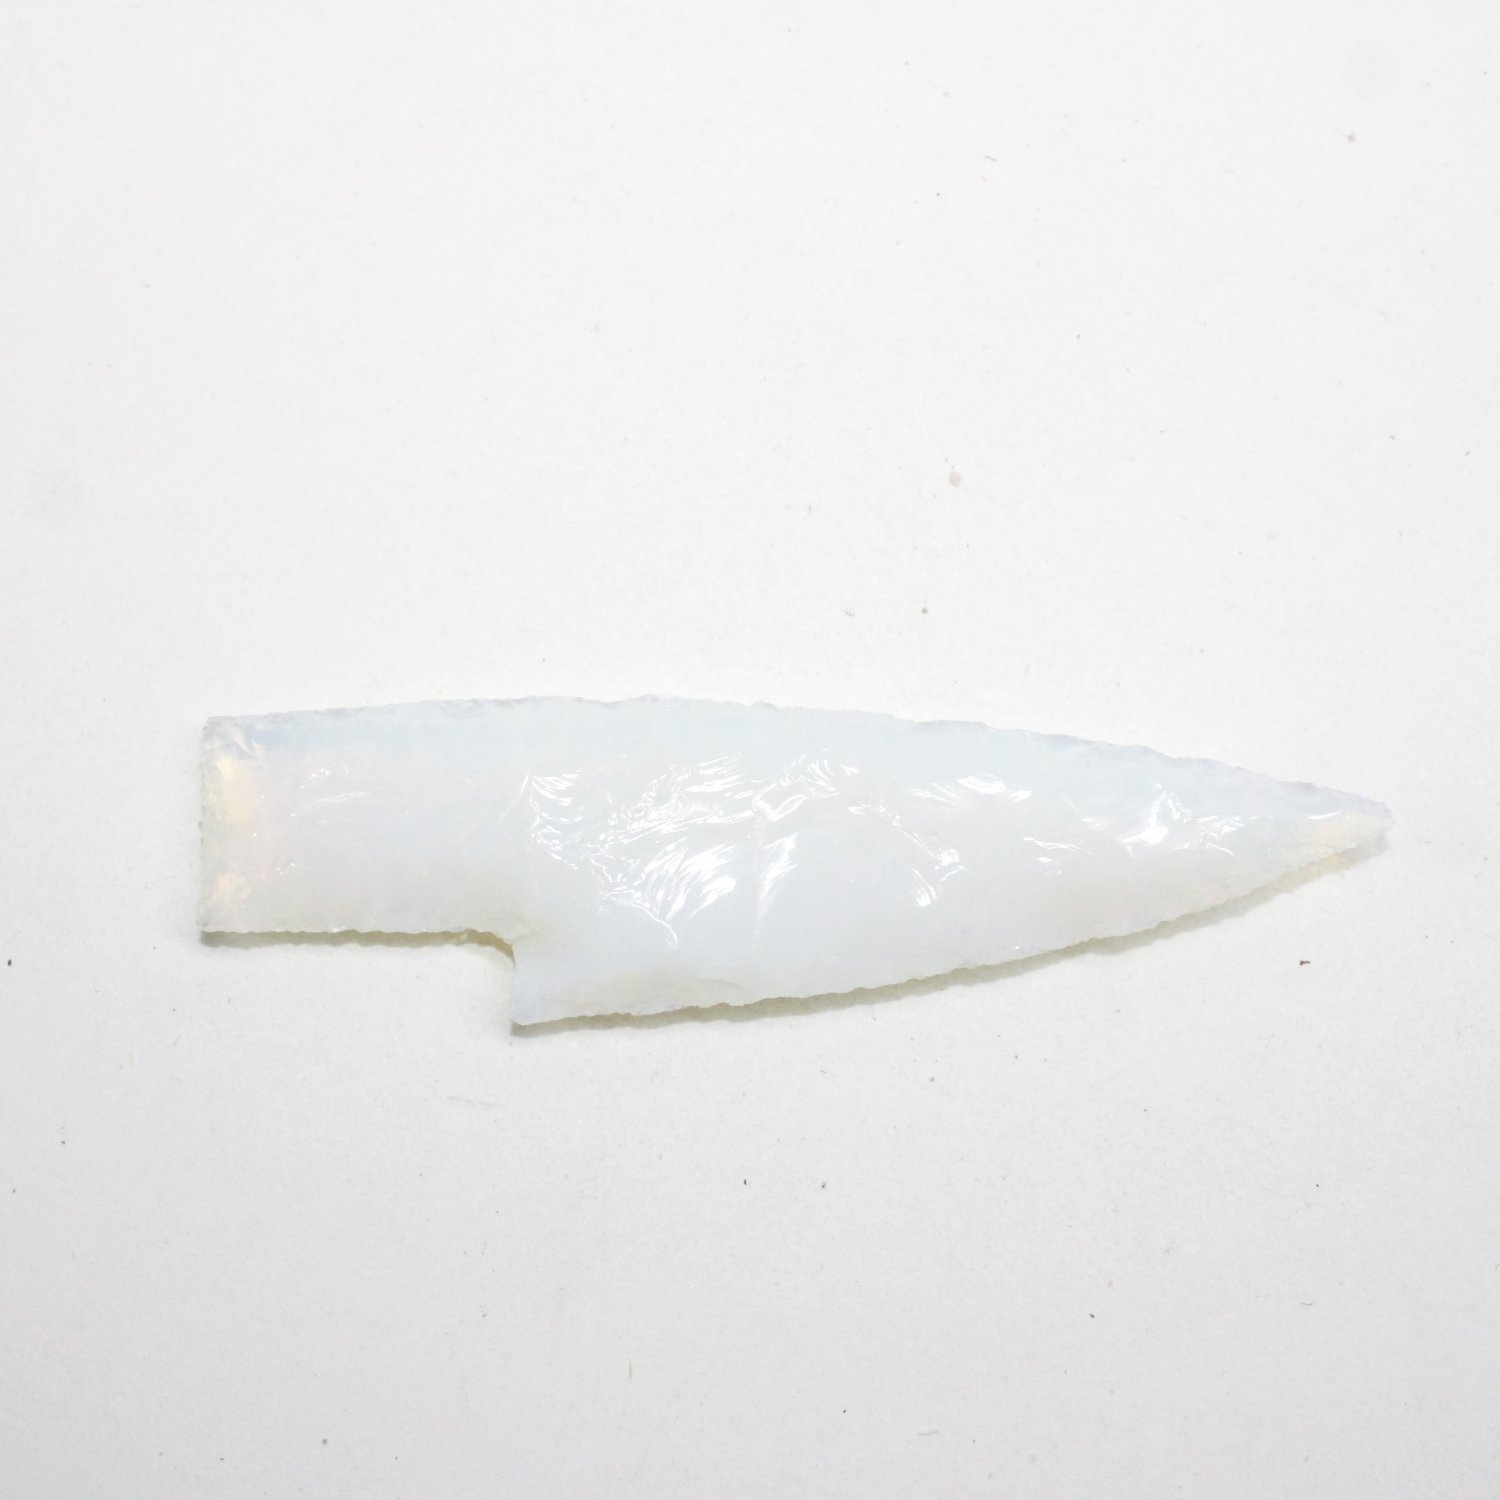 1 Opalite Ornamental Knife Blade  #8710  Mountain Man Knife